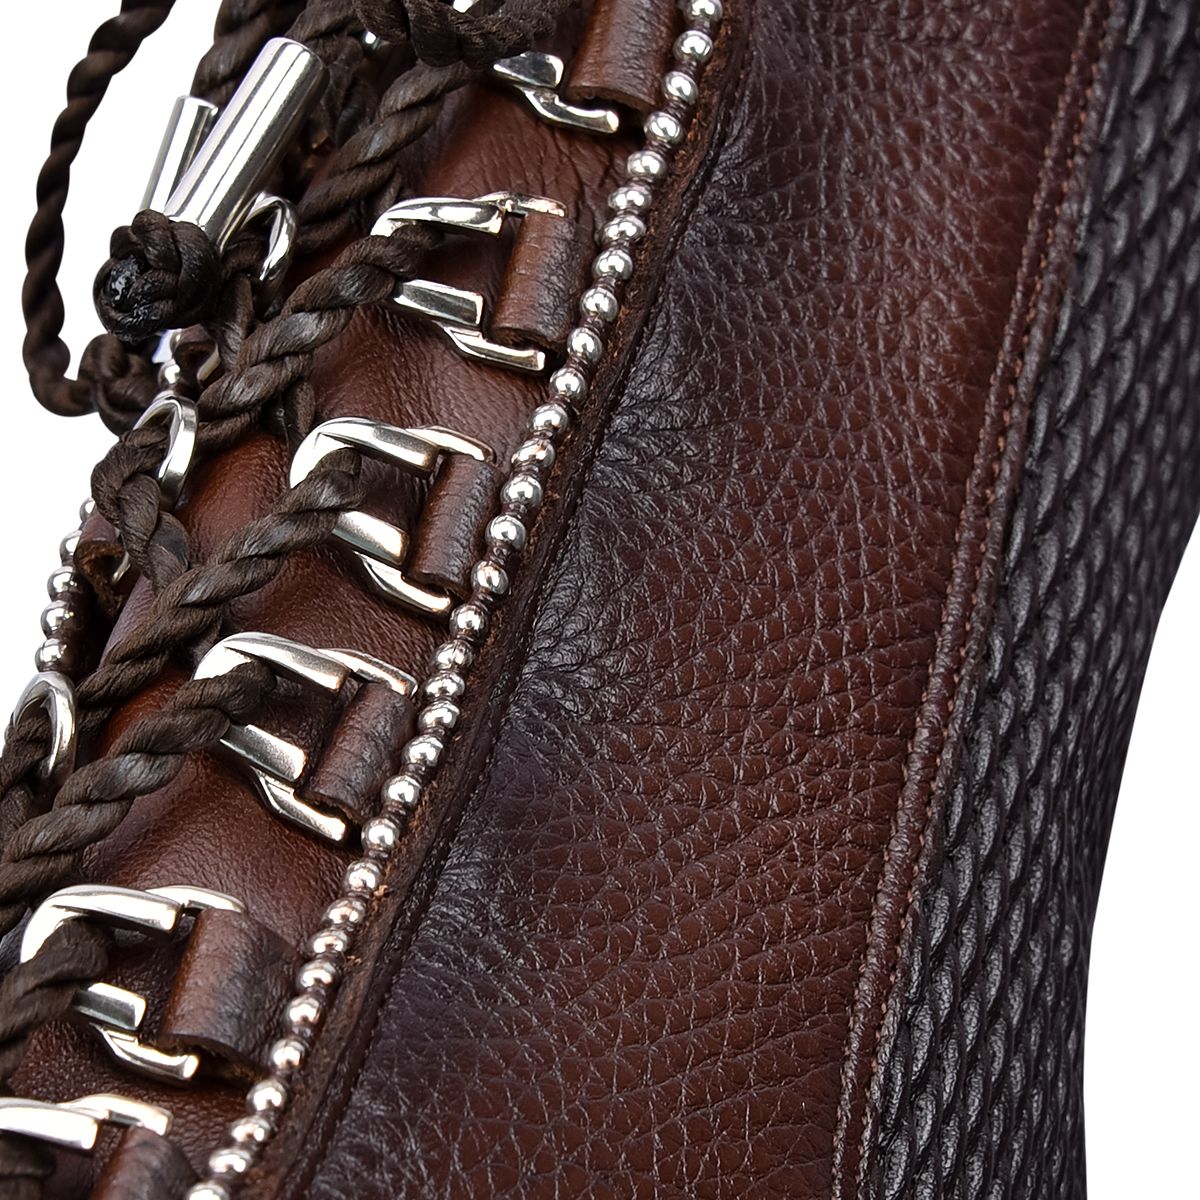 3F84RS - Cuadra chocolate Paris Texas cowboy leather ankle boots for women-CUADRA-Kuet-Cuadra-Boots